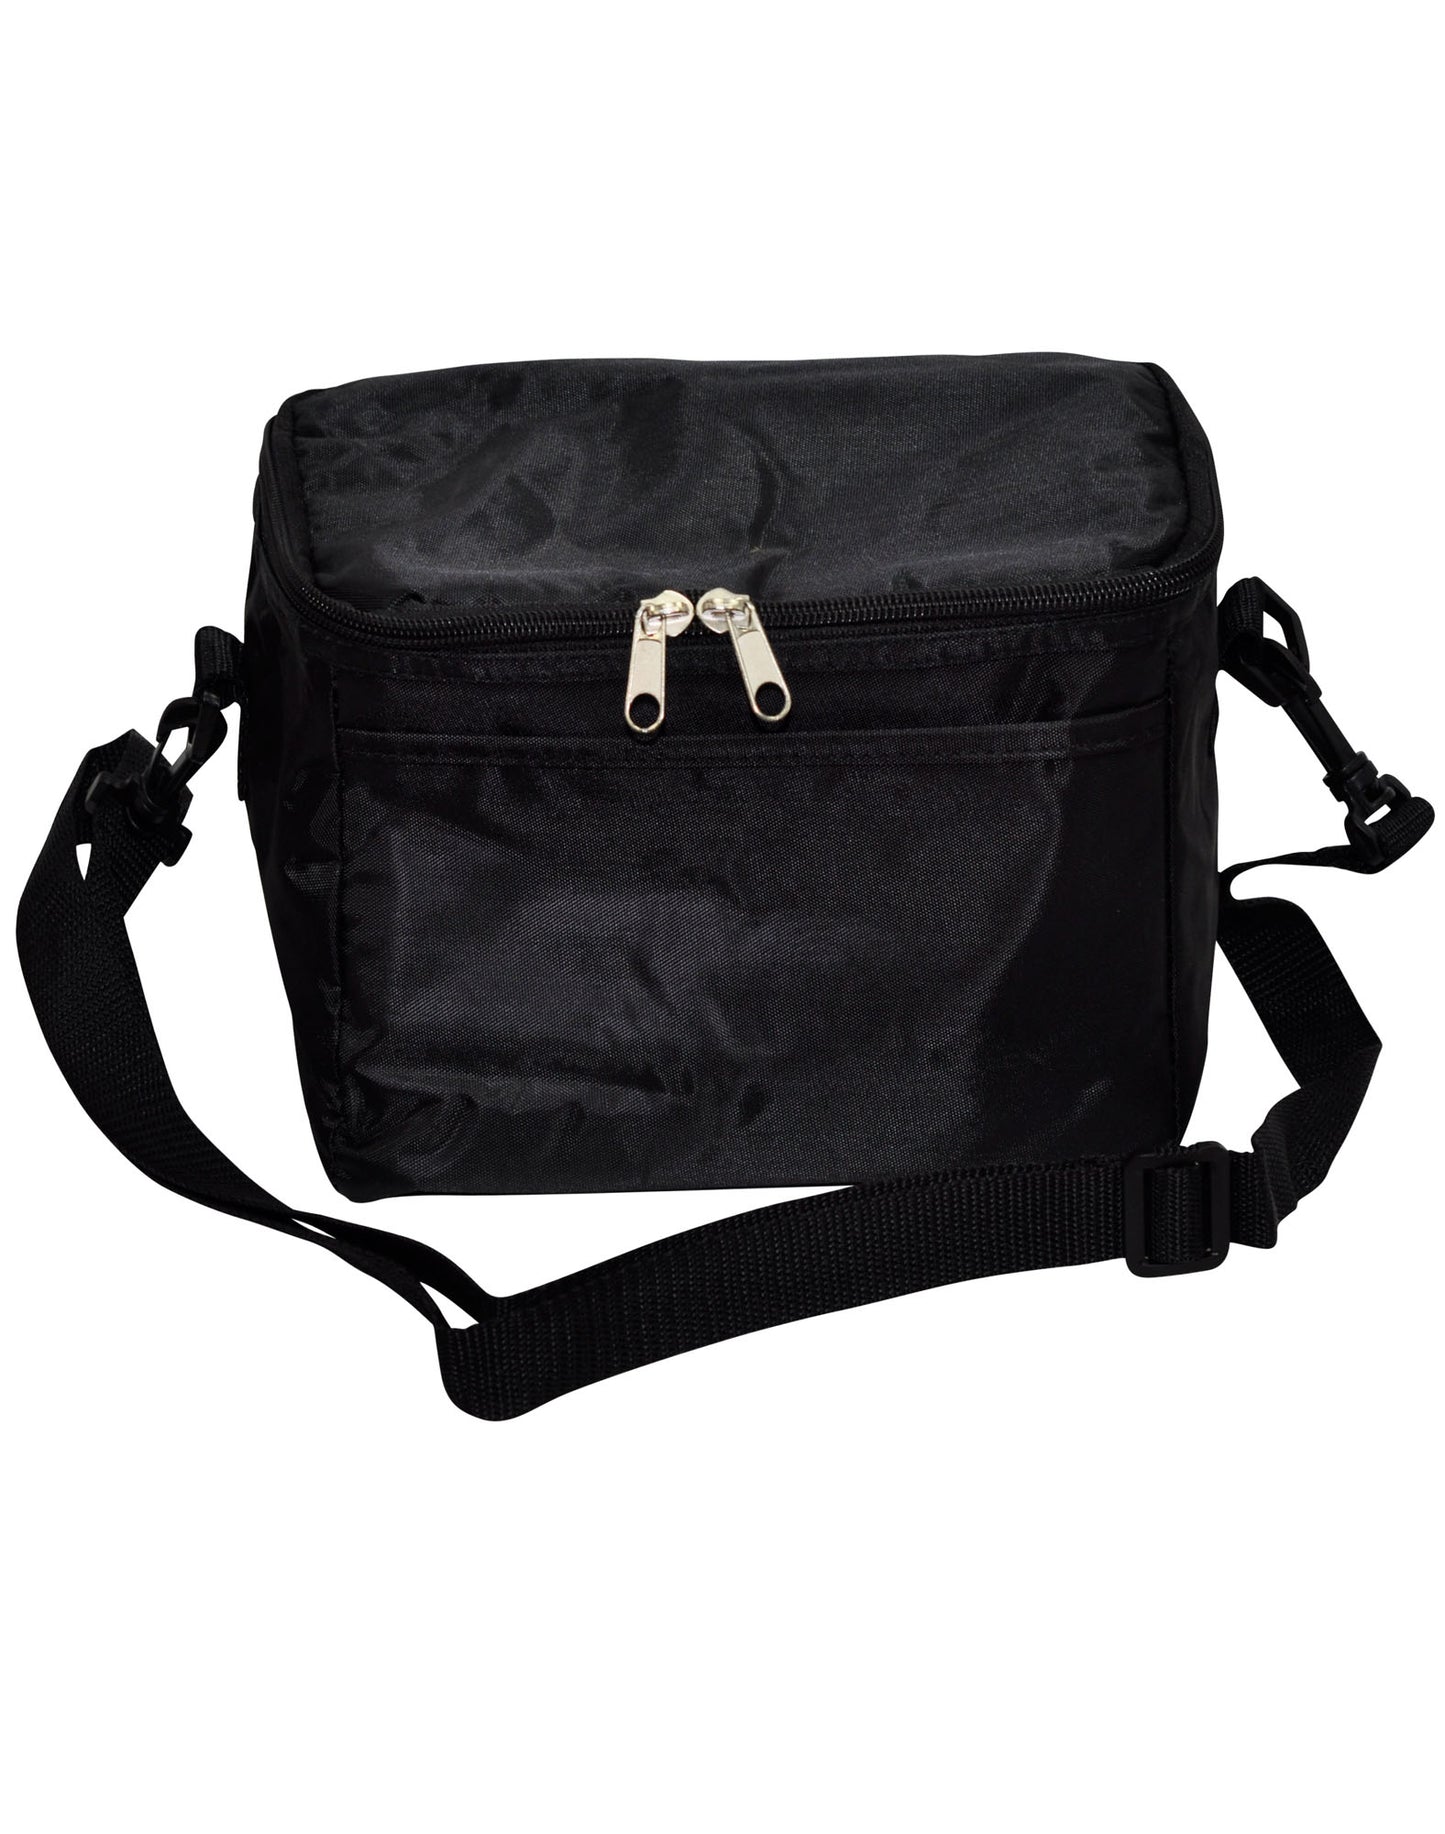 Winning Spirit Cooler Bag - 6 Can Cooler Bag (B6001)